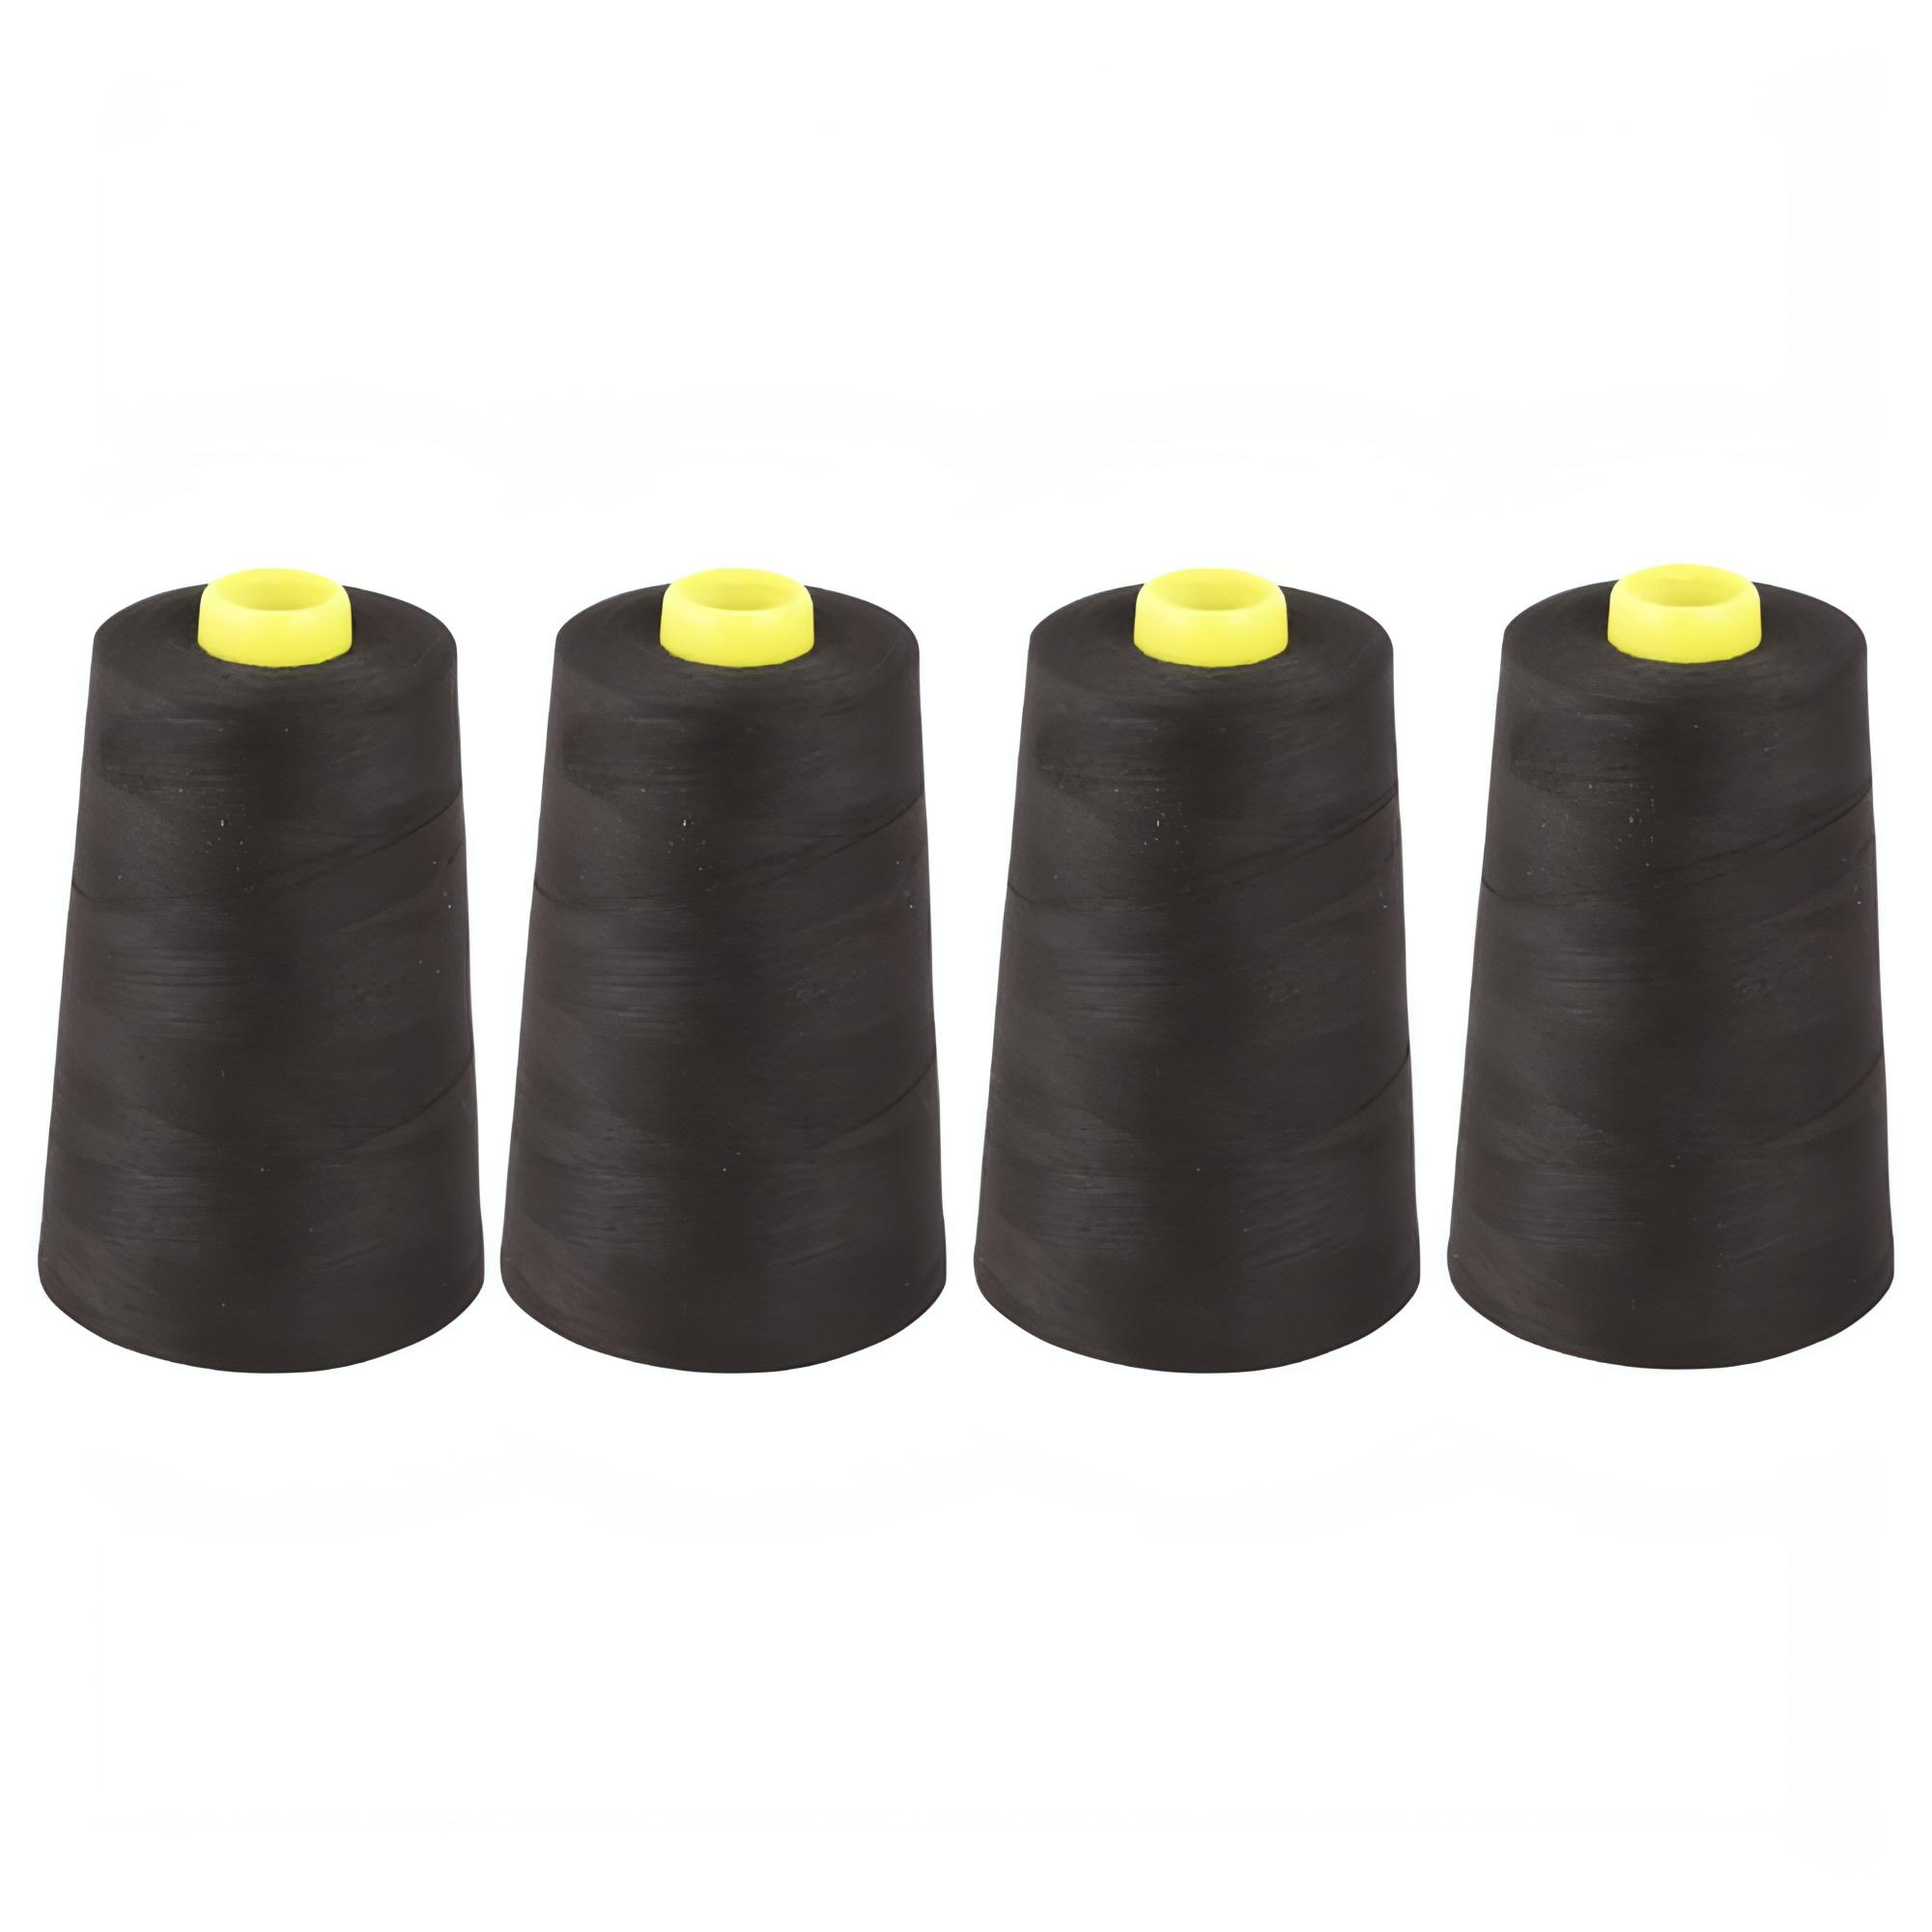 Pack of 4 x Overlocker Thread Cone 5000m Extra Large - Black - Designed for Overlockers